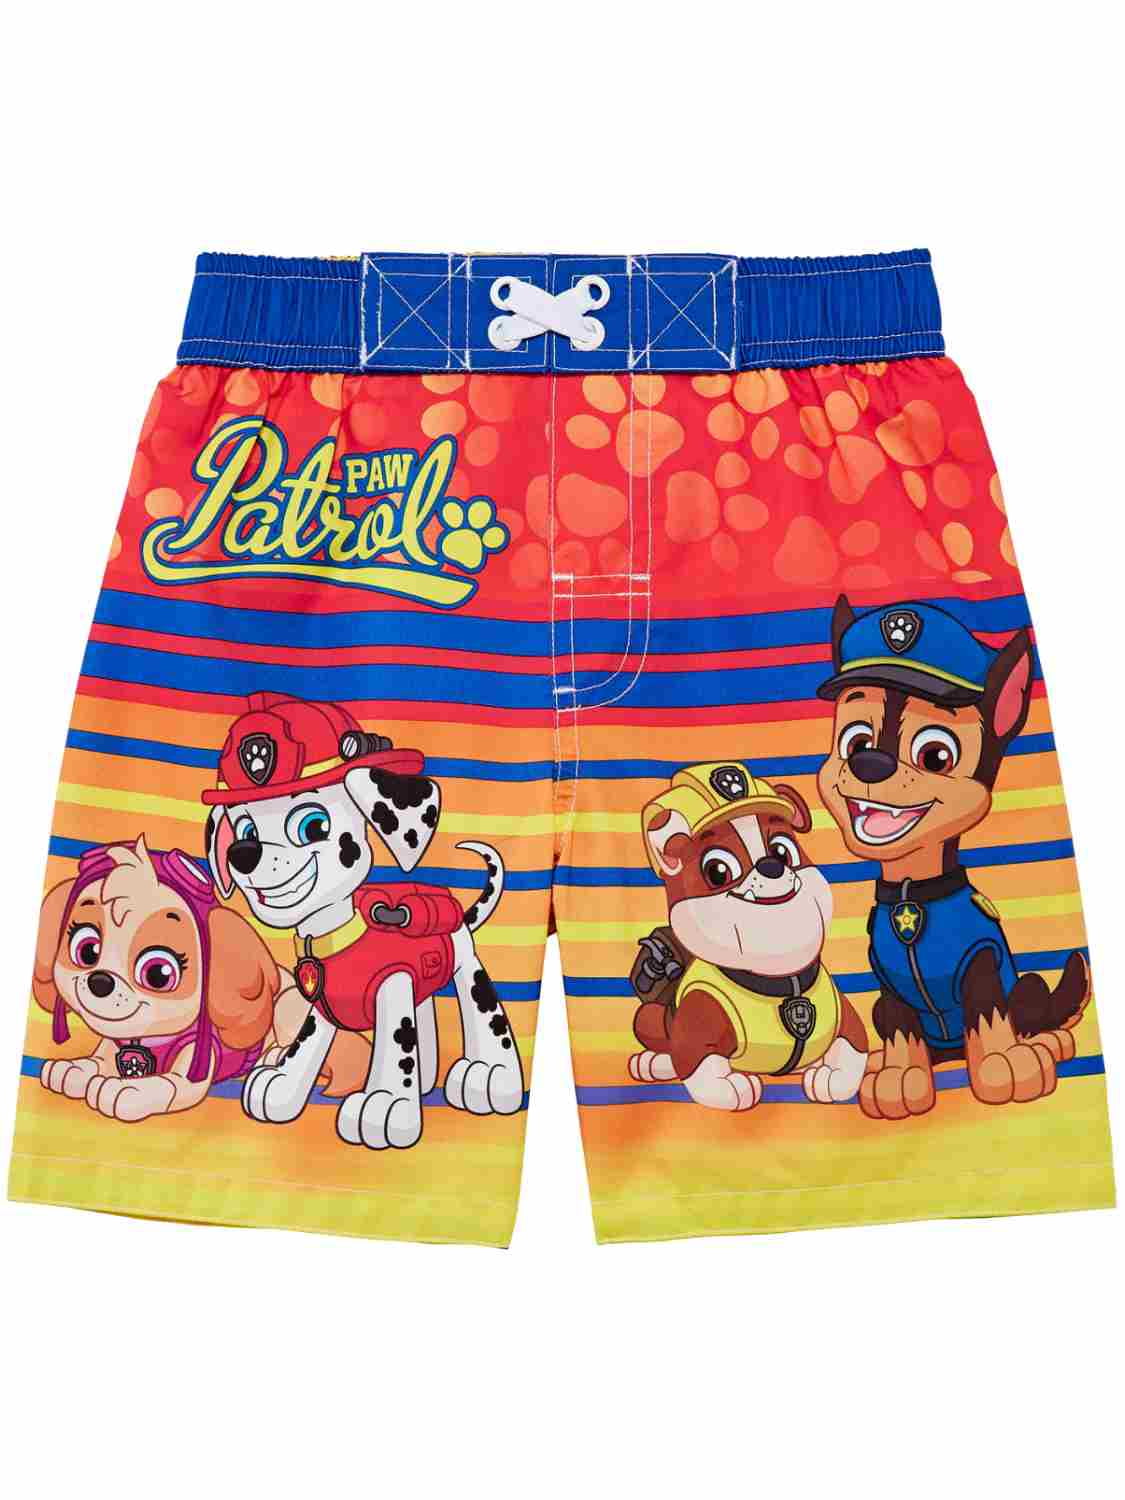 Toddler Boys Red Stripe Paw Patrol Puppy Dog Swim Trunks Board Shorts ...